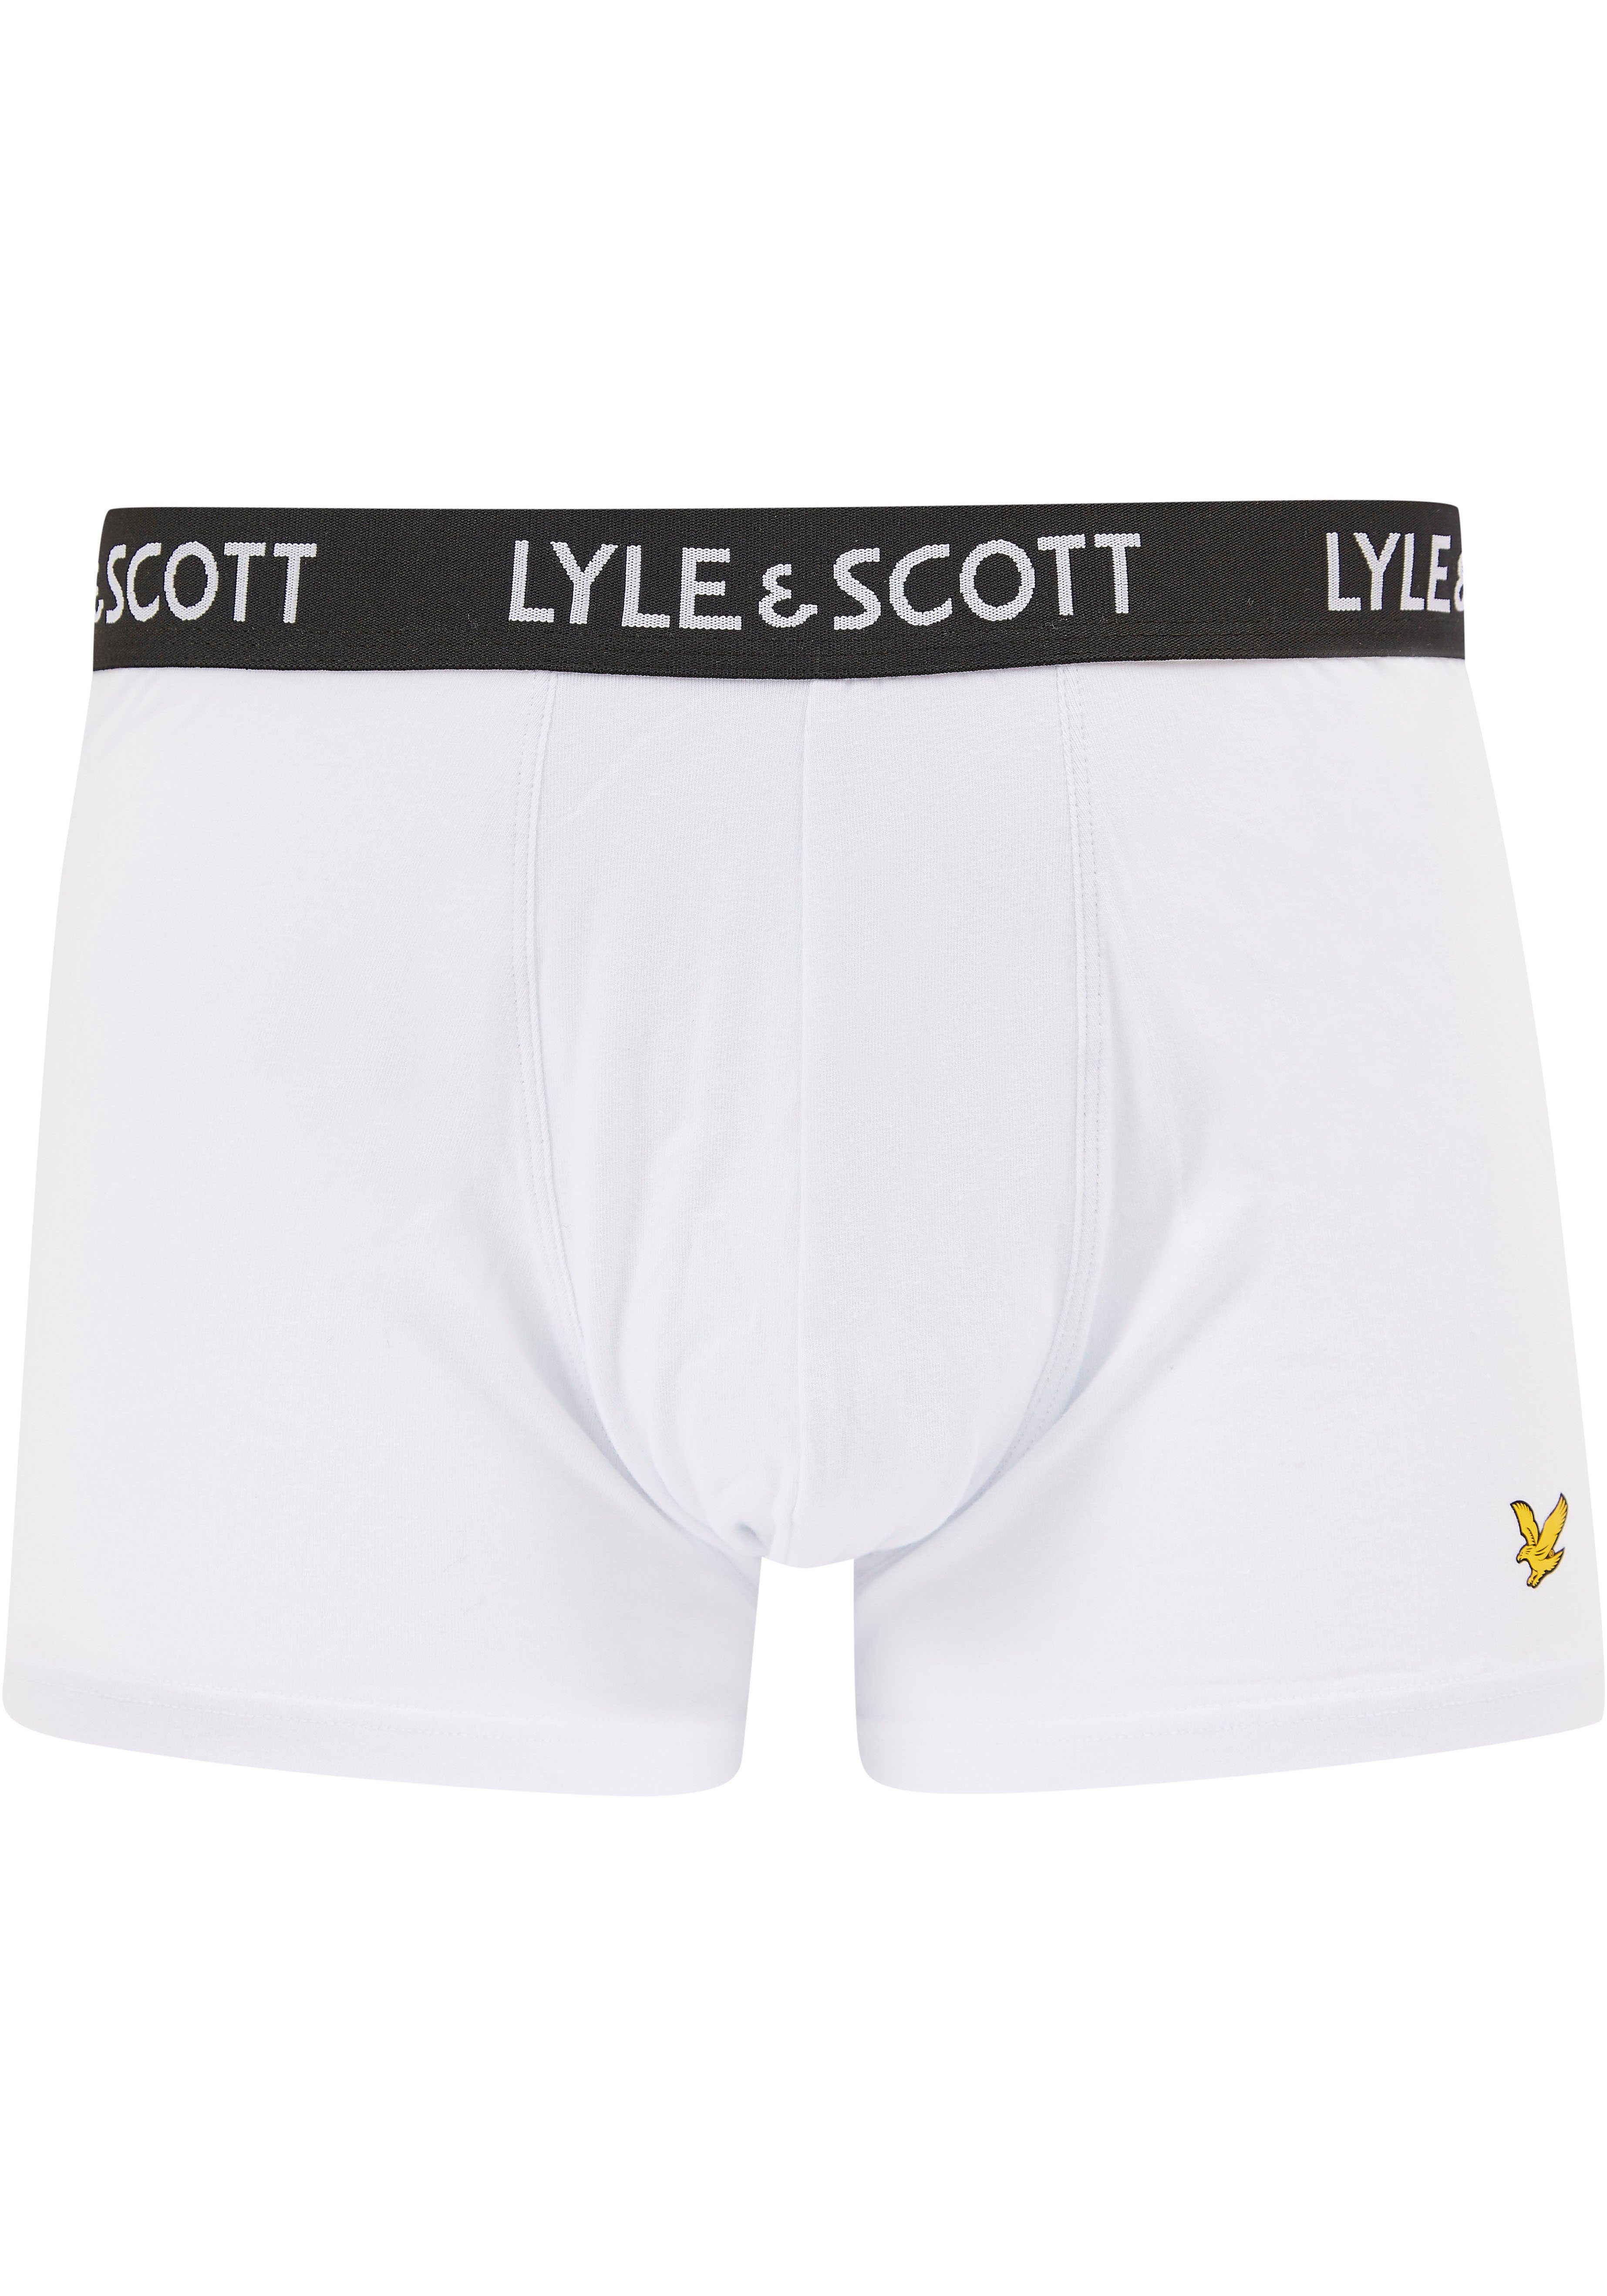 Lyle 5-St) marl/peacoat Boxershorts white/light marl/dark mit Logo-Elastikbund Scott black/bright & grey grey (Packung,